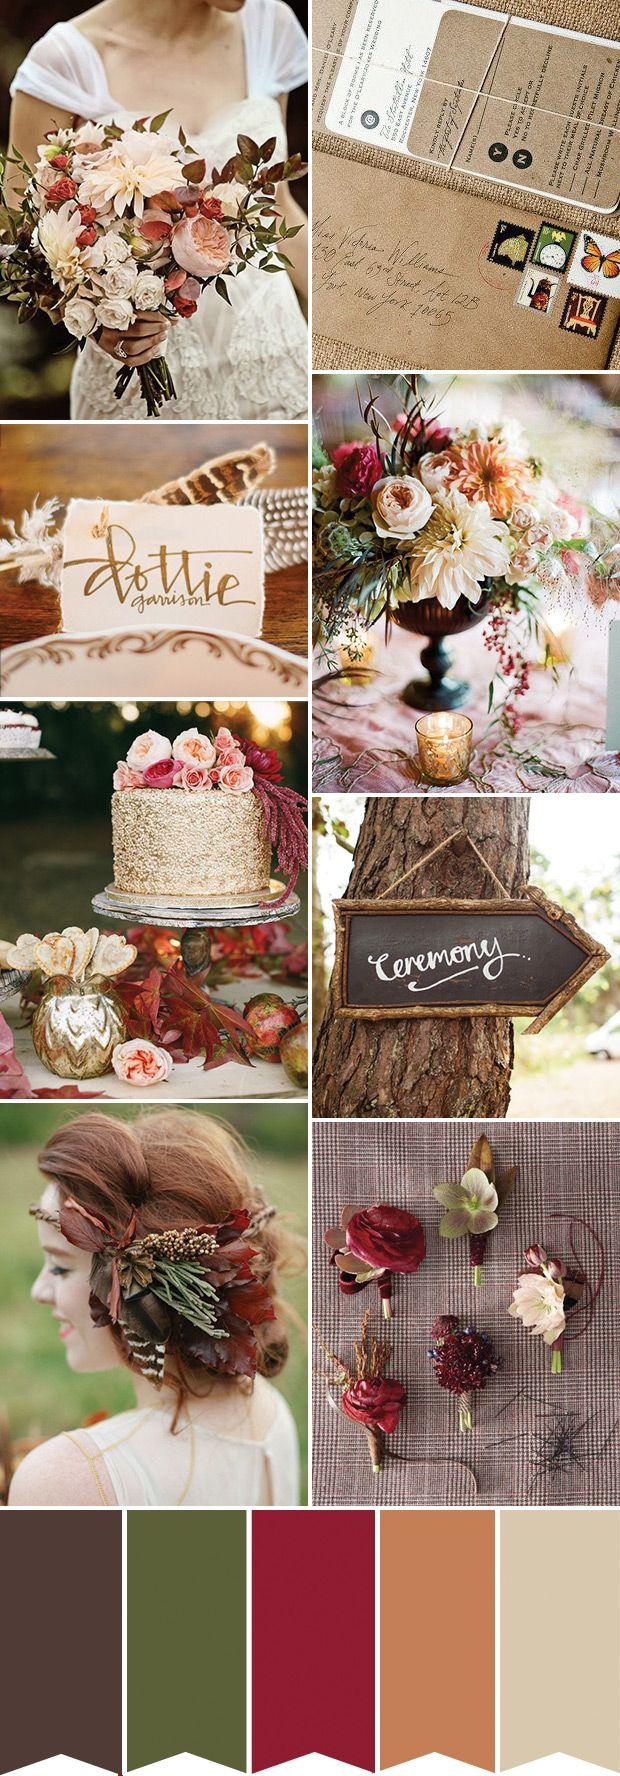 Wedding - Rustic Chic - Autumn Wedding Inspiration